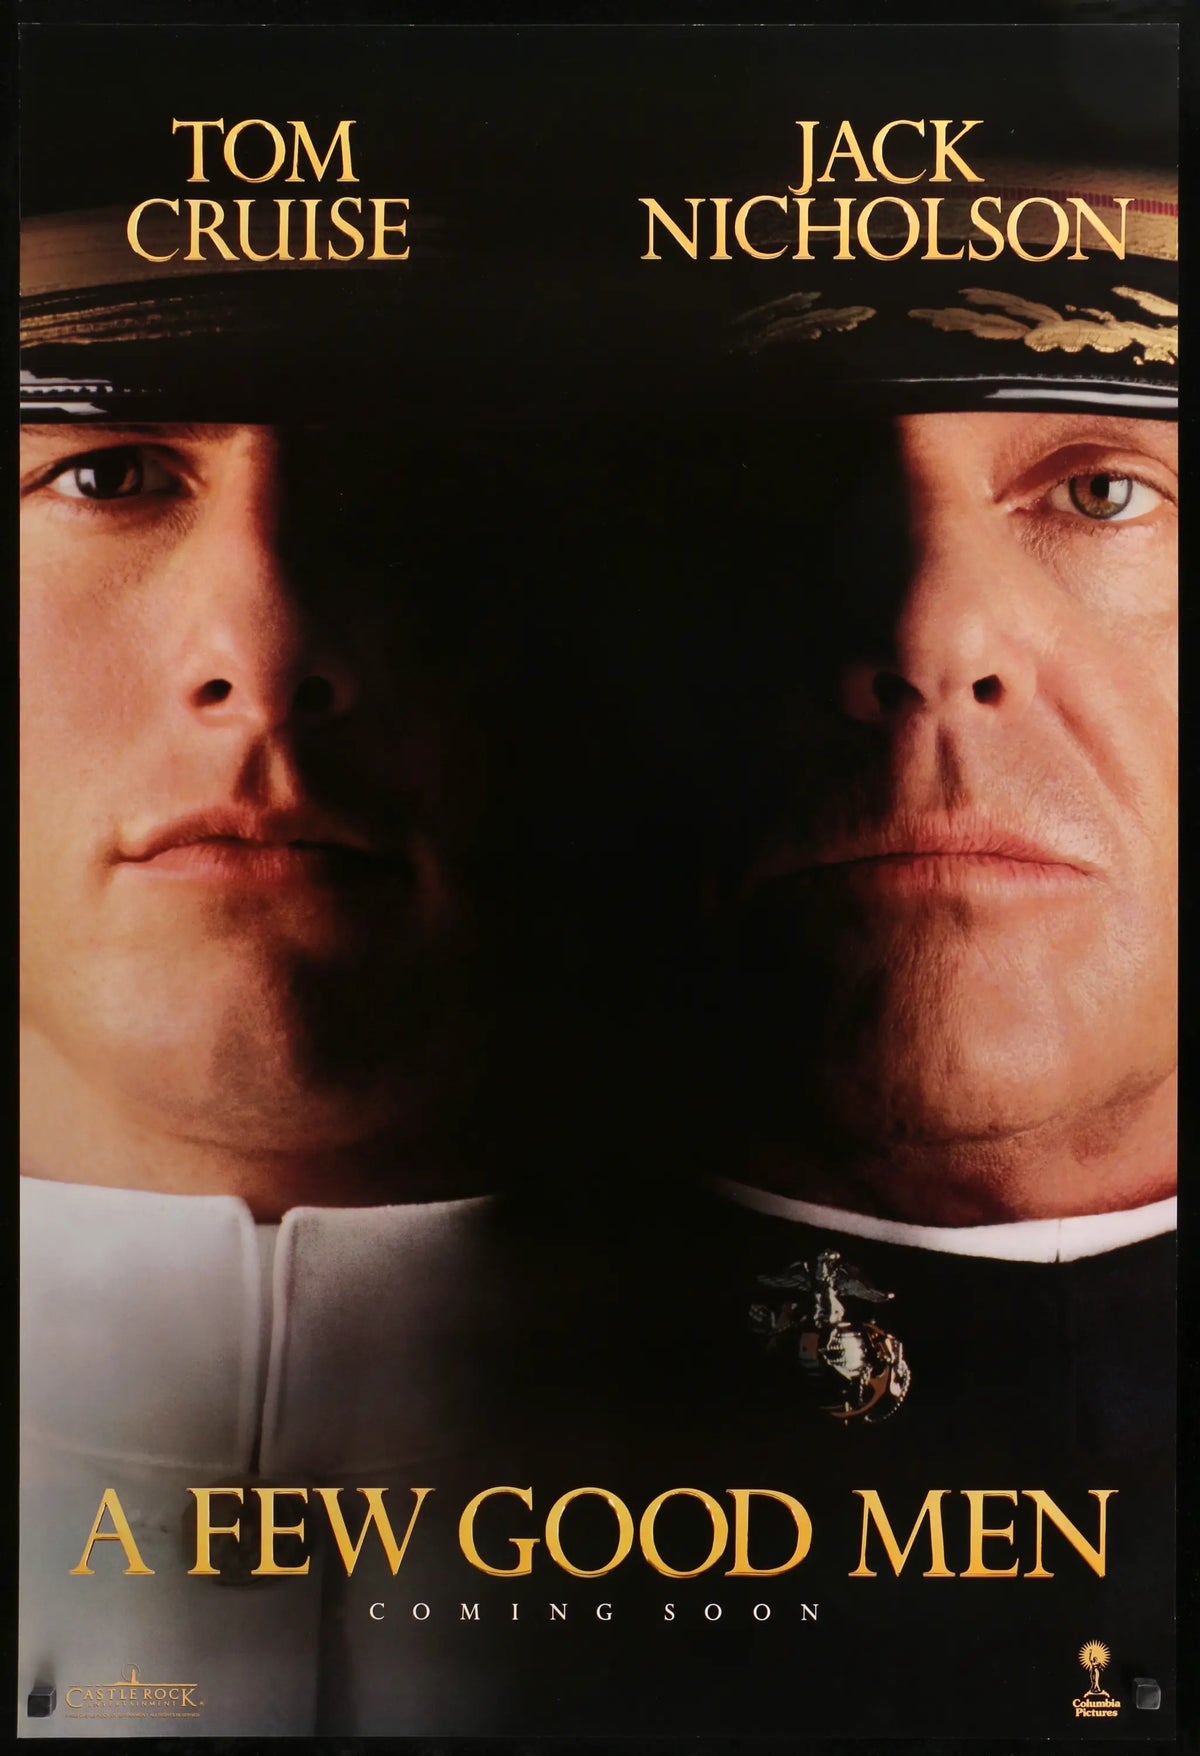 Few Good Men (1992) original movie poster for sale at Original Film Art